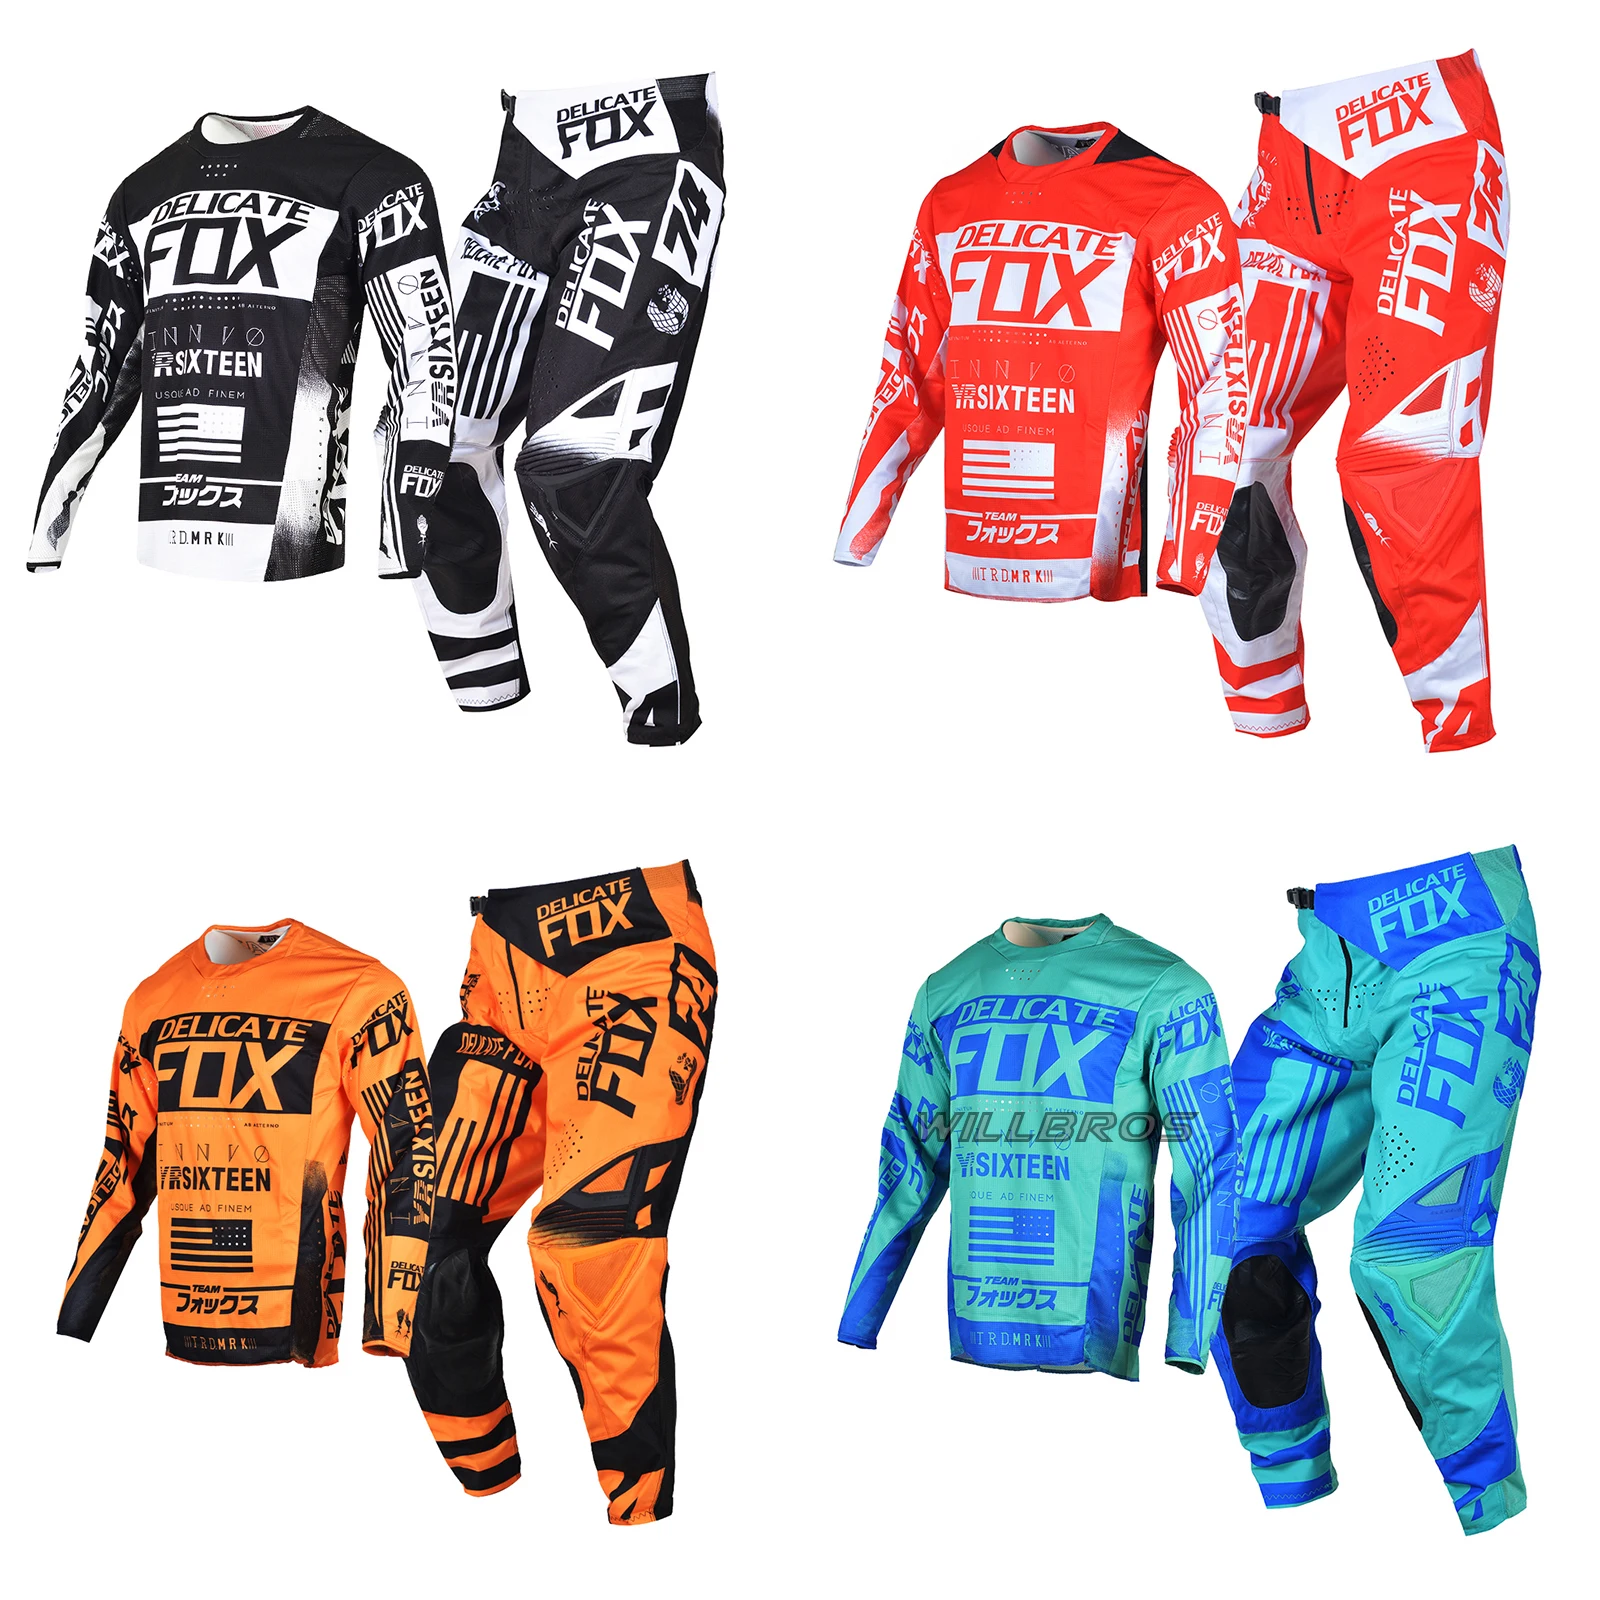 360 Flight Jersey Pants Motocross Racing Gear Set Mountain Bike Cycling Combo Kits Mens Motorbike Moto Cross Black Suit